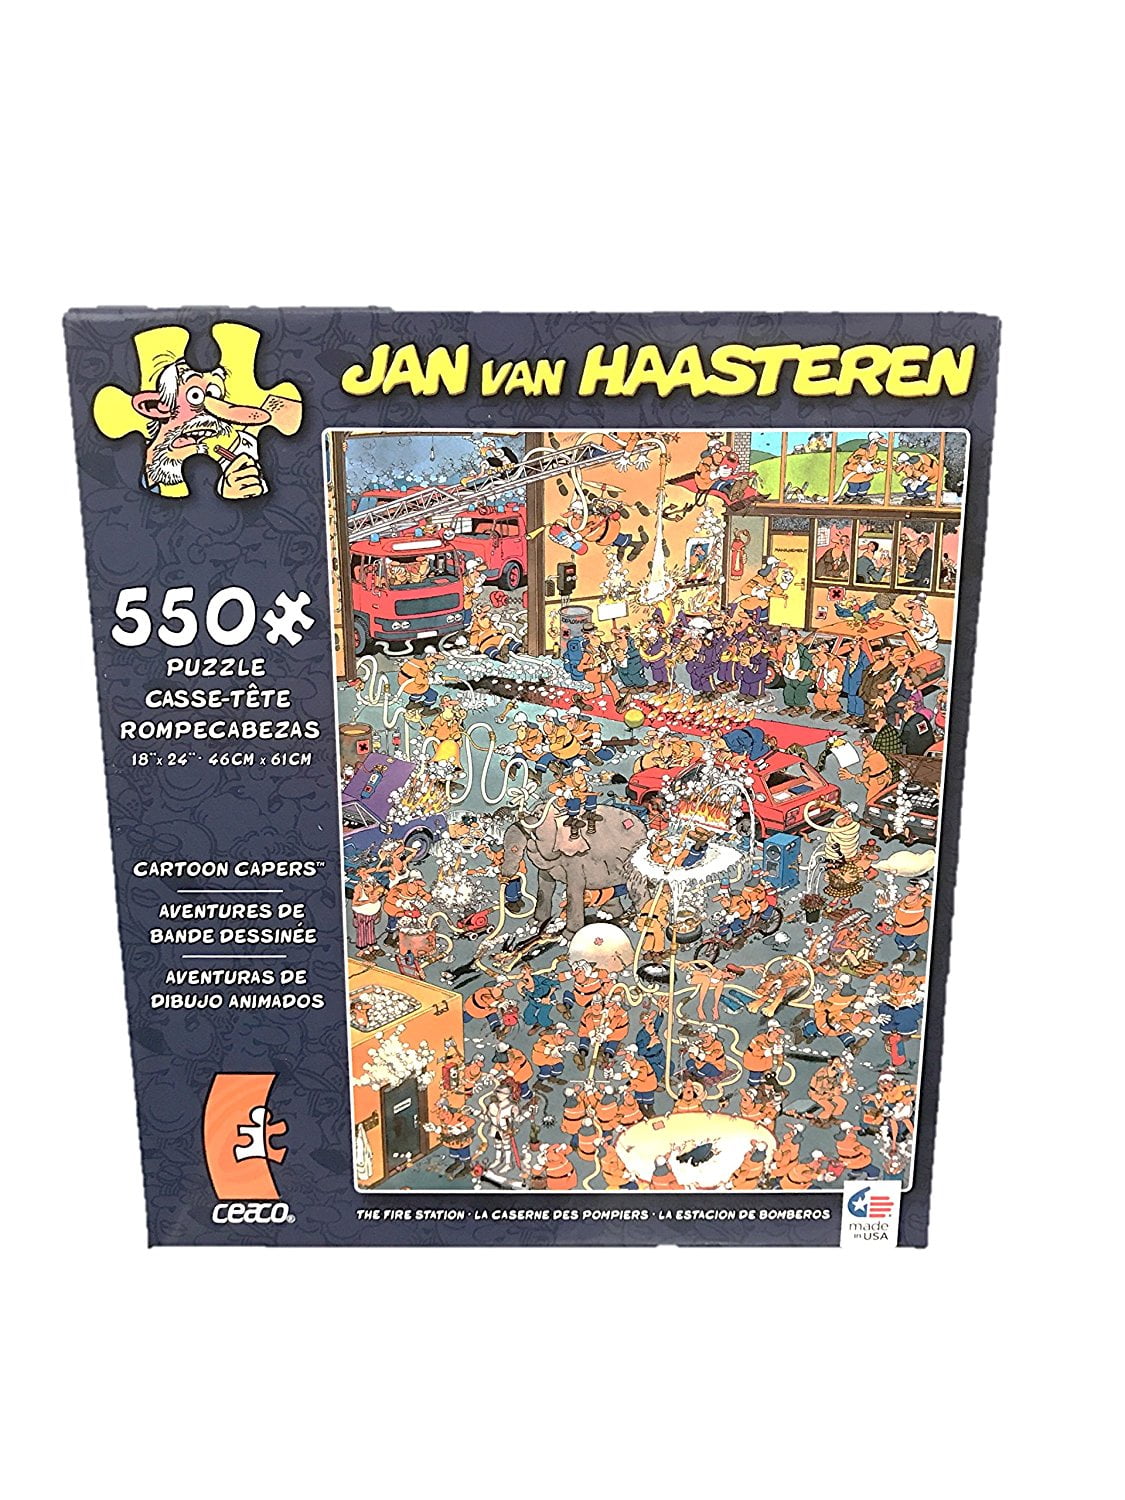 Distilleren Haarzelf commando CARTOON CAPERS by JAN VAN HAASTEREN Art "The Fire Station" 550 Piece JIGSAW  Puzzle, By Ceaco from USA - Walmart.com